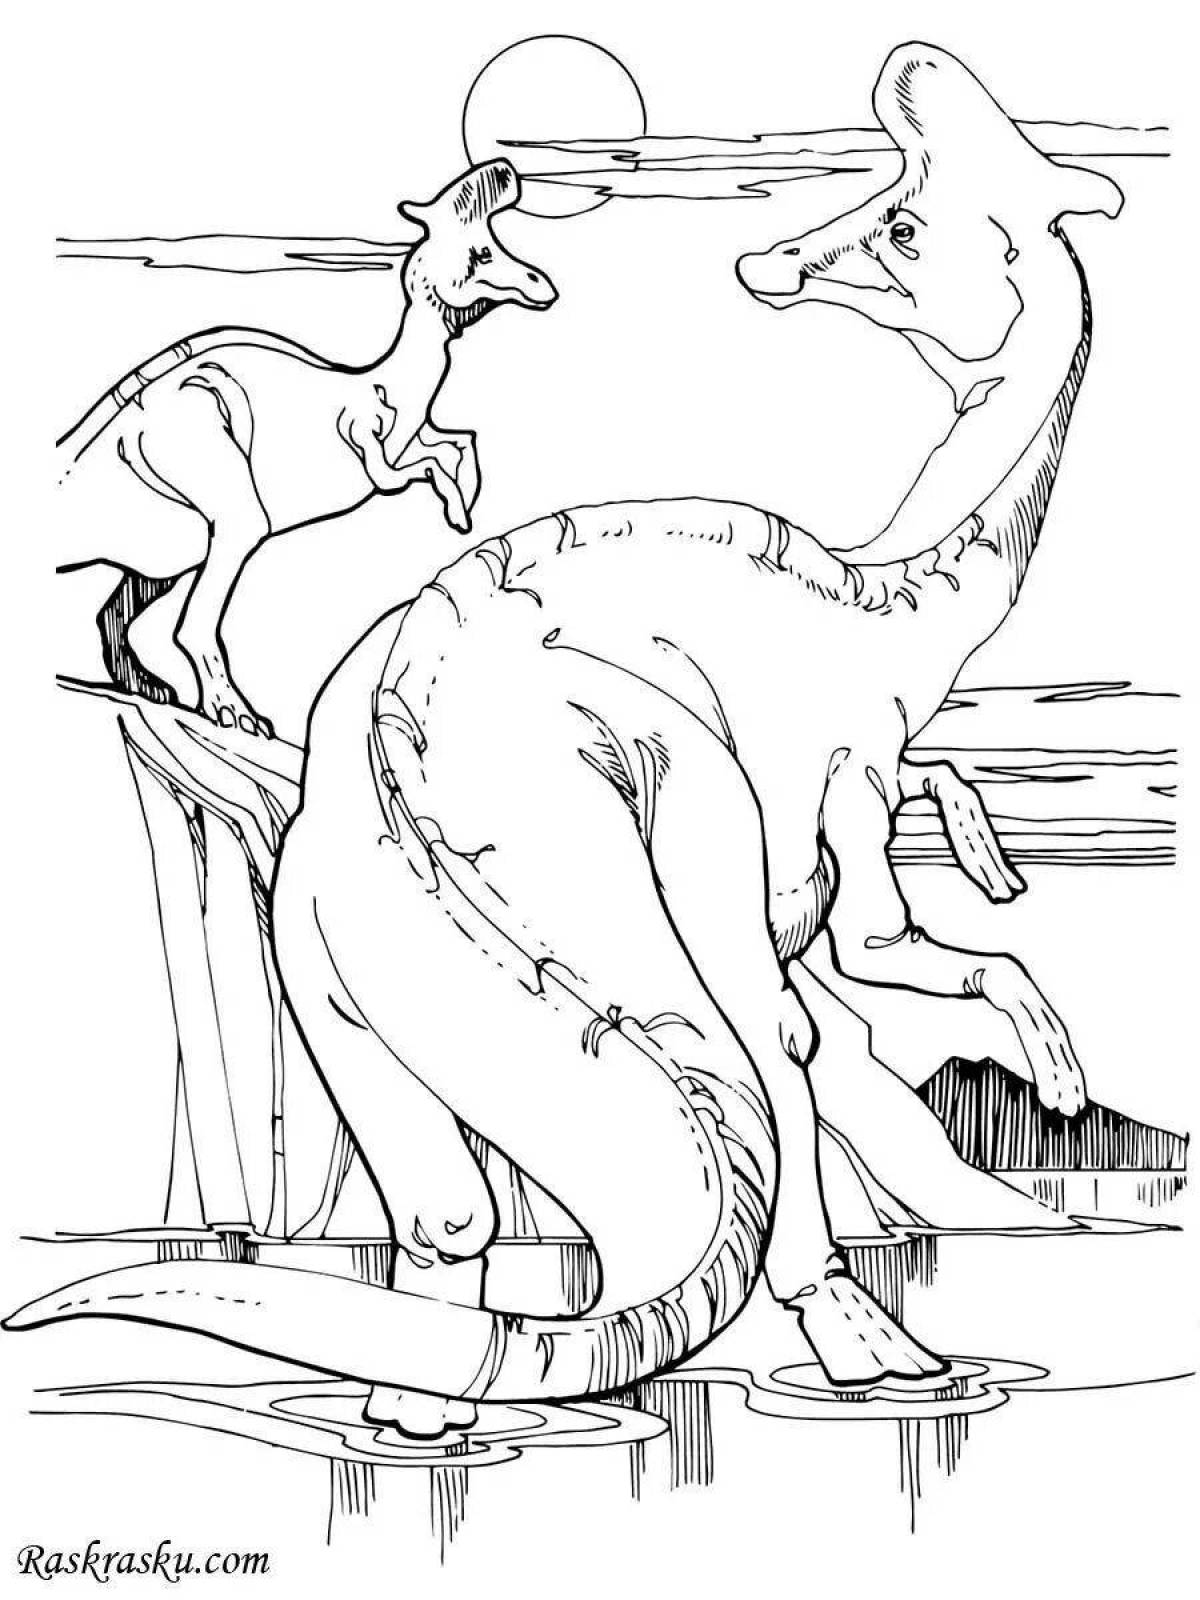 Generous Parasaurolophus dinosaur coloring book